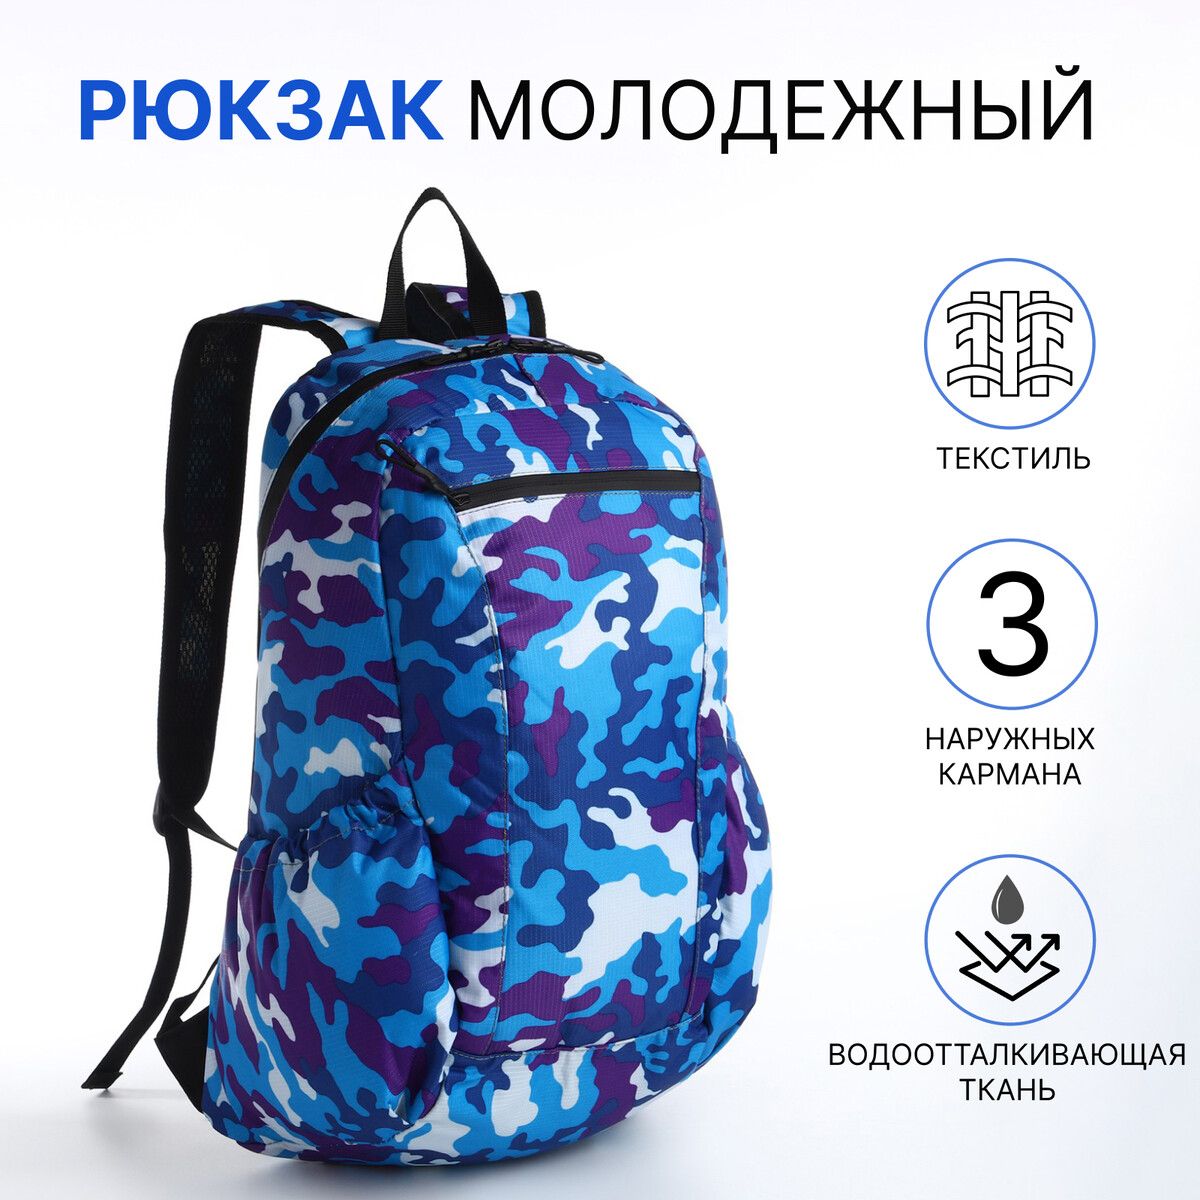 Рюкзак молодежный, водонепроницаемый на молнии, 3 кармана, цвет синий рюкзак молодежный из текстиля на молнии водонепроницаемый наружный карман синий